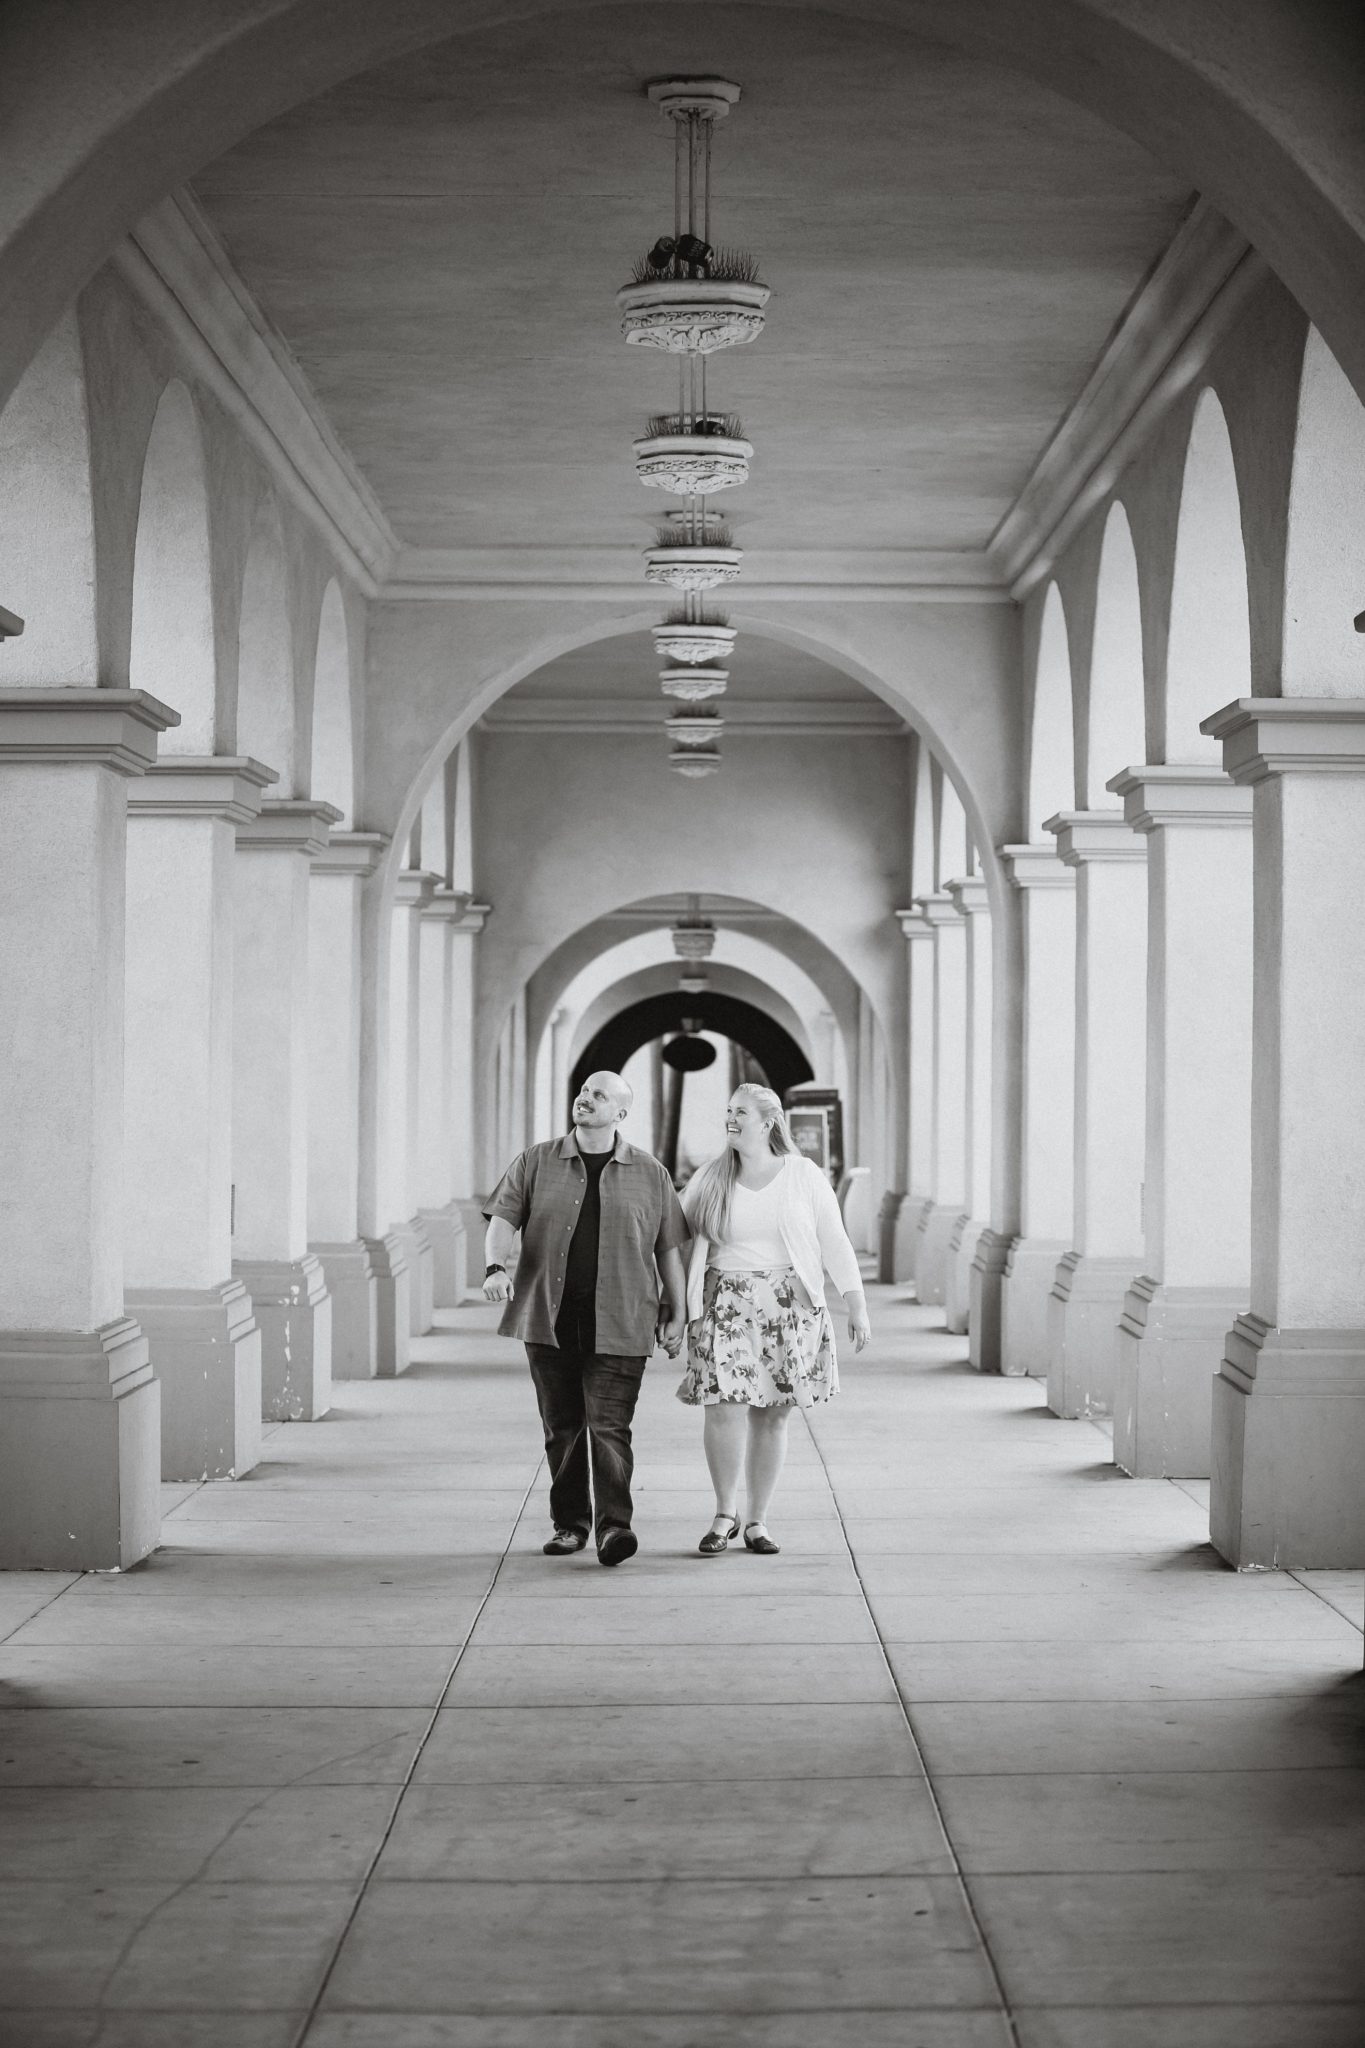 Guy and girl walking between columns